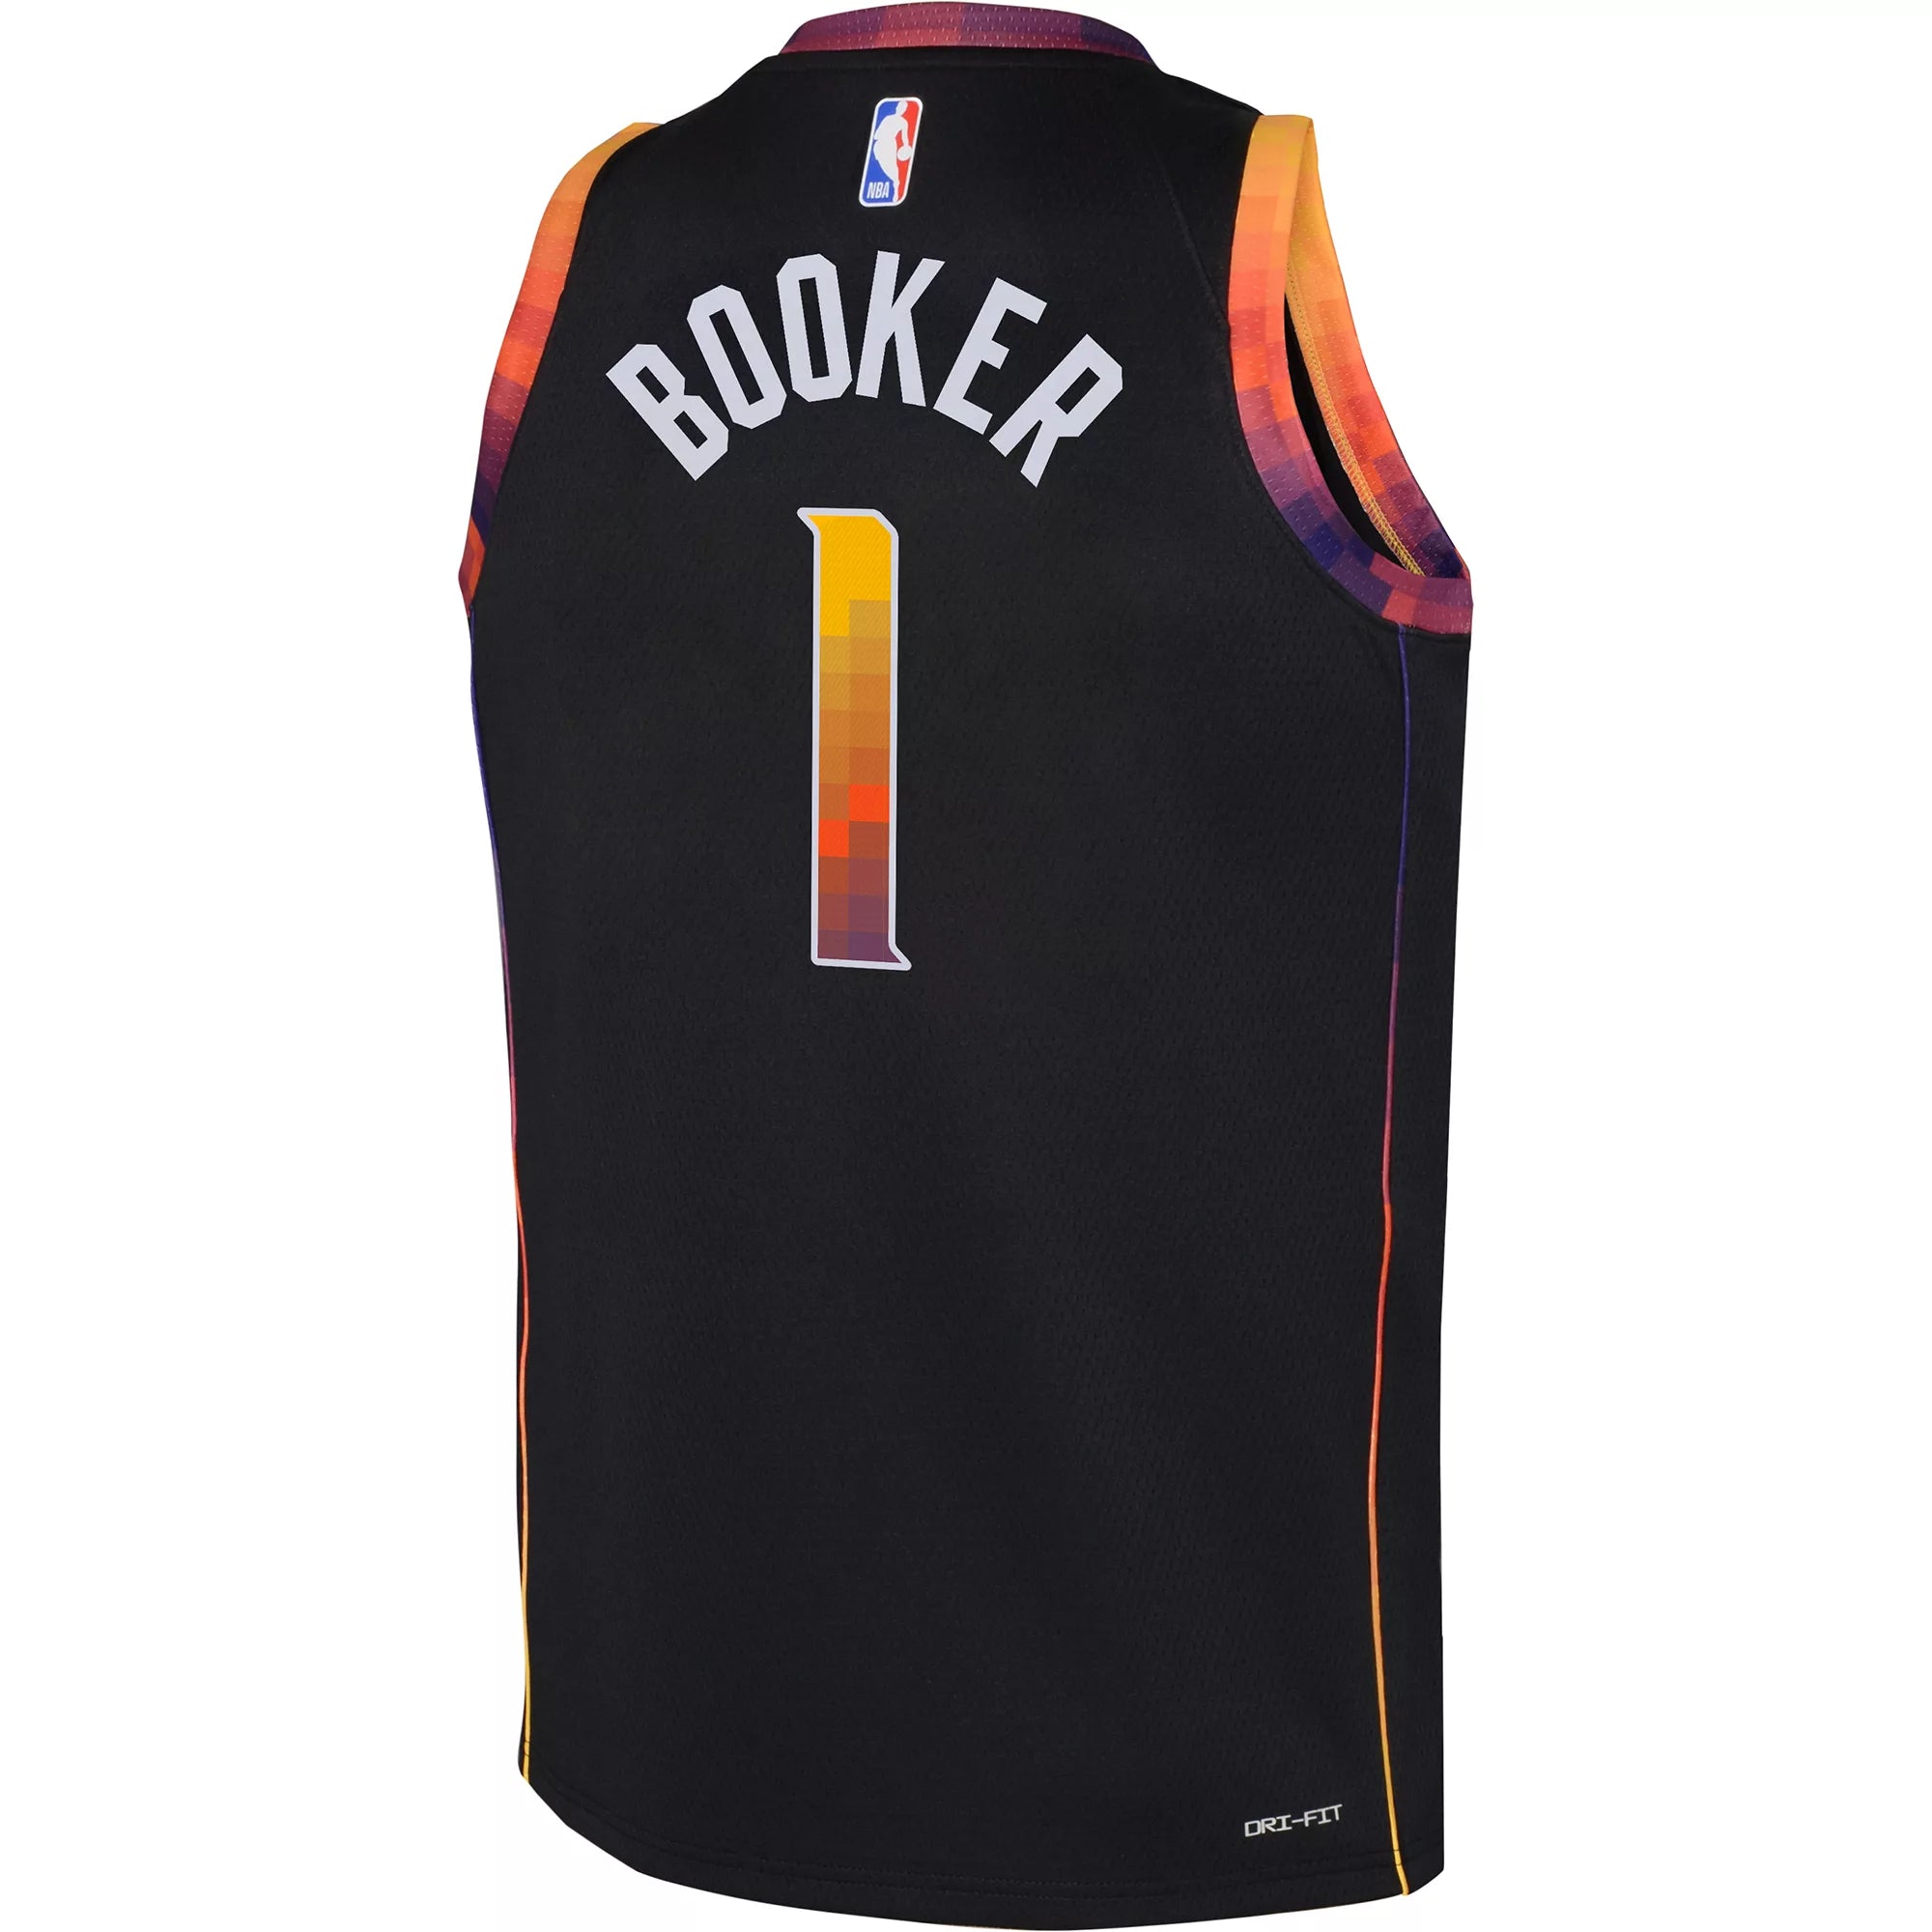 🎽22-23 Wholesale NBA Basketball Jersey Season Suns Durant Kd Chris Paul  Devon Booker Elton Jersey Announcement Version Of City 35